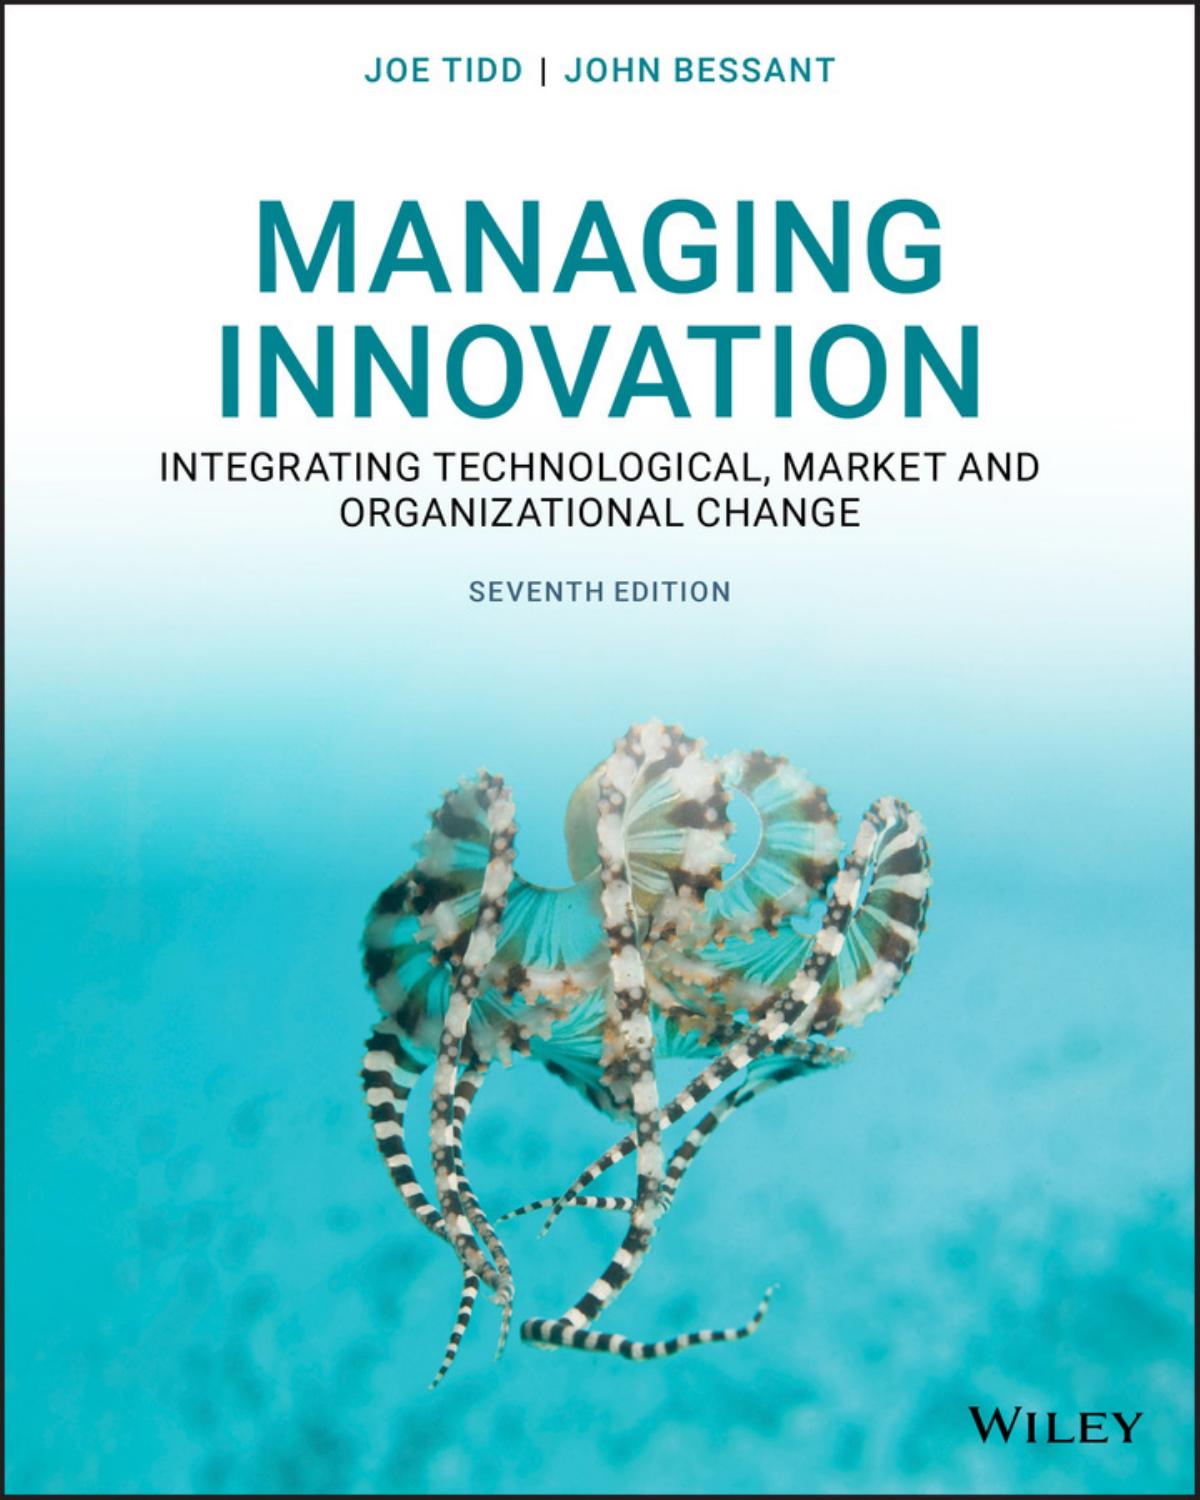 (eBook PDF)Managing Innovation: Integrating Technological, Market and Organizational Change 7th Edition by Joe Tidd,John R. Bessant